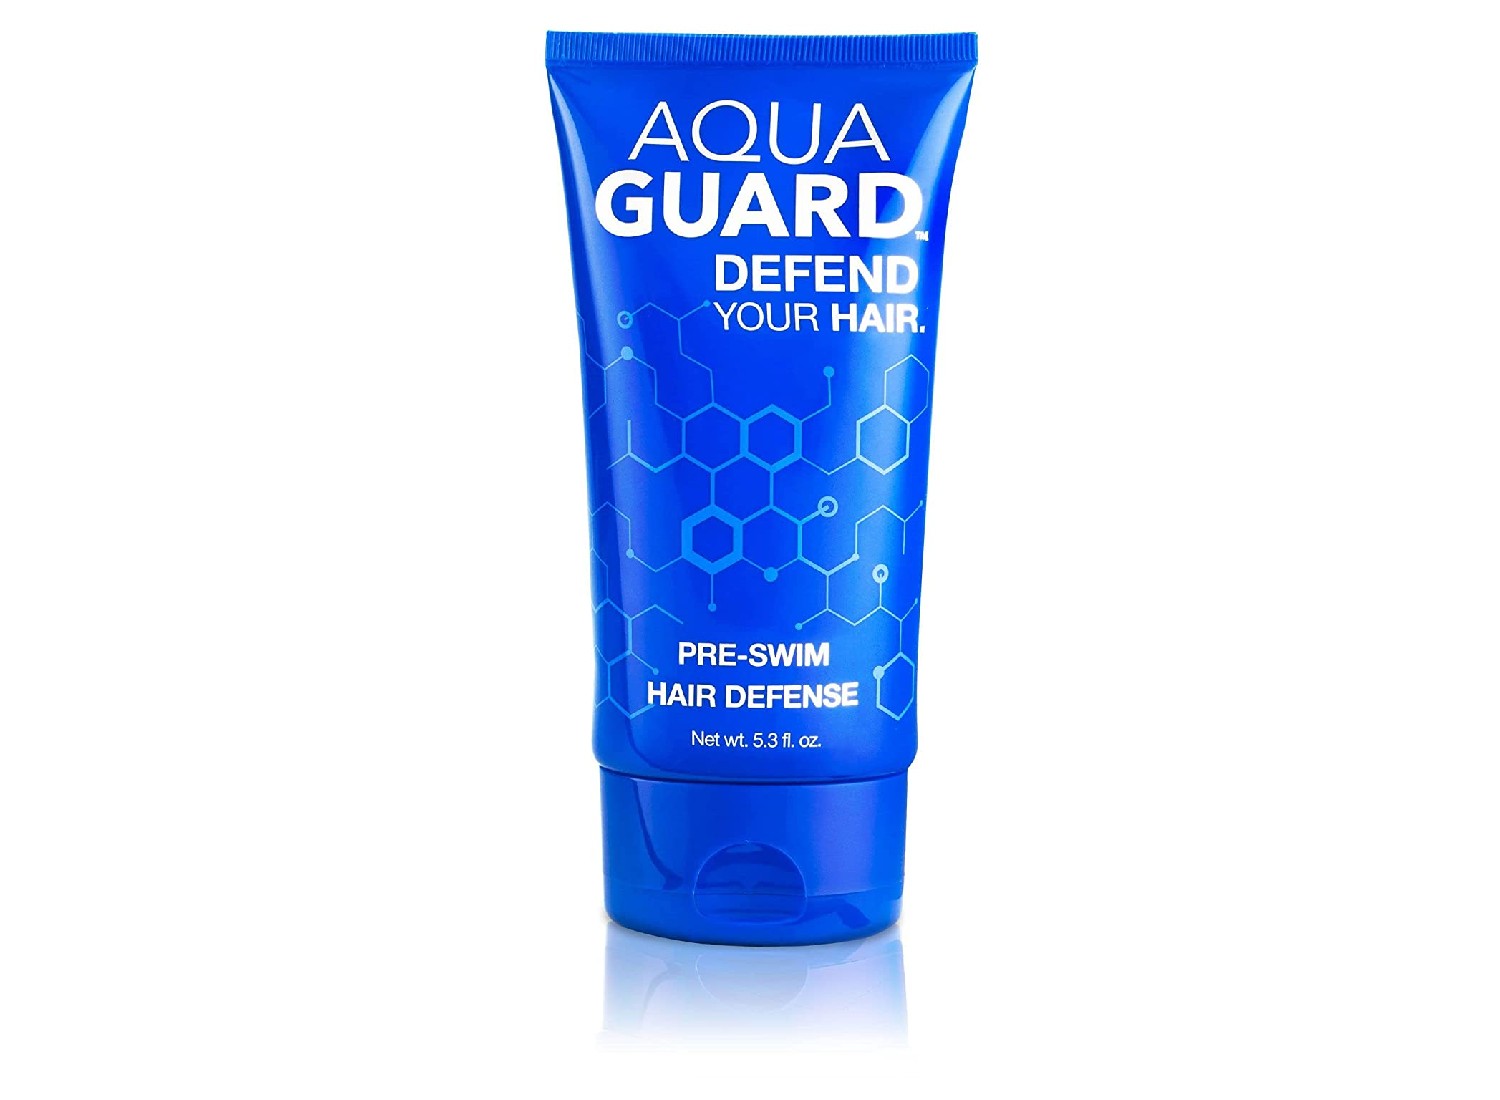 A blue bottle of Aqua Guard.